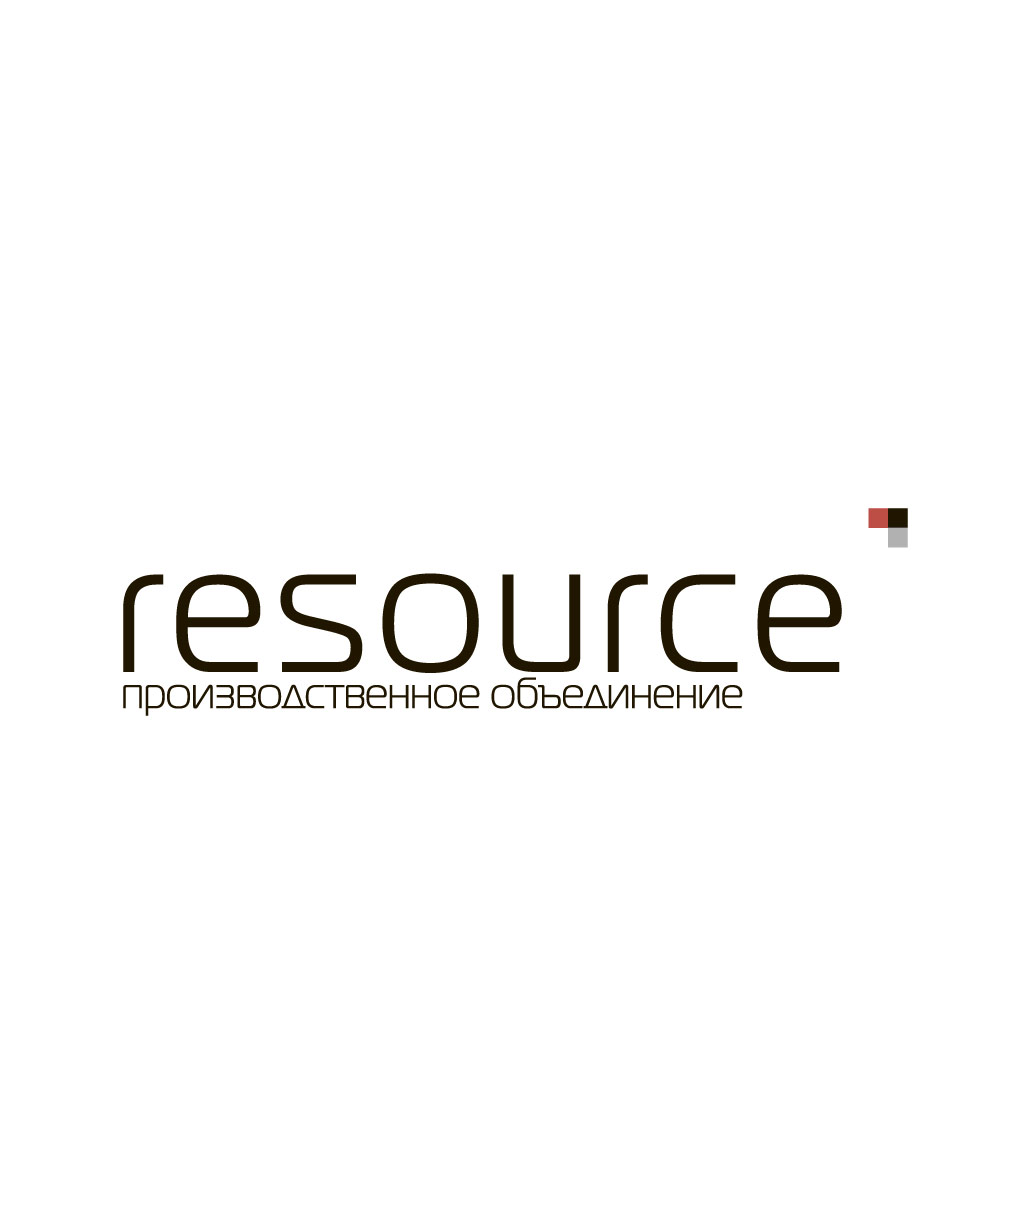 Https pro resource